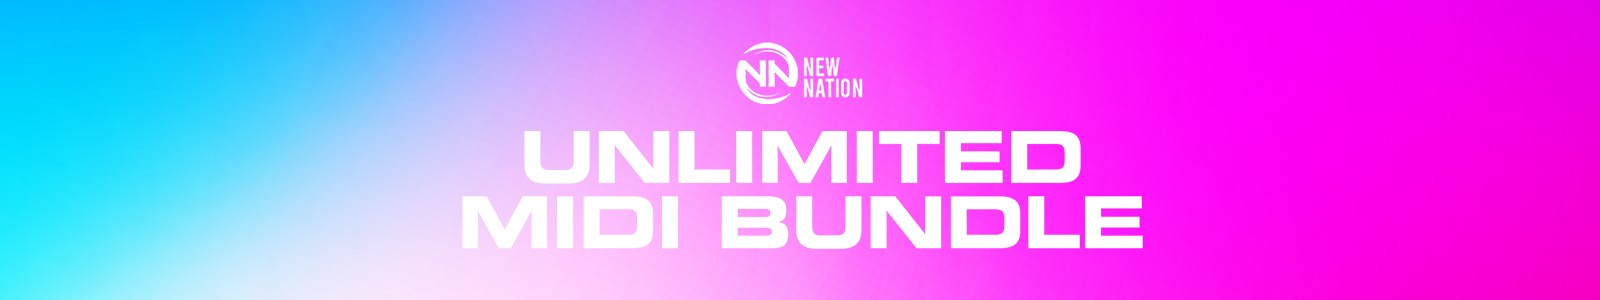 New Nation Unlimited MIDI Bundle